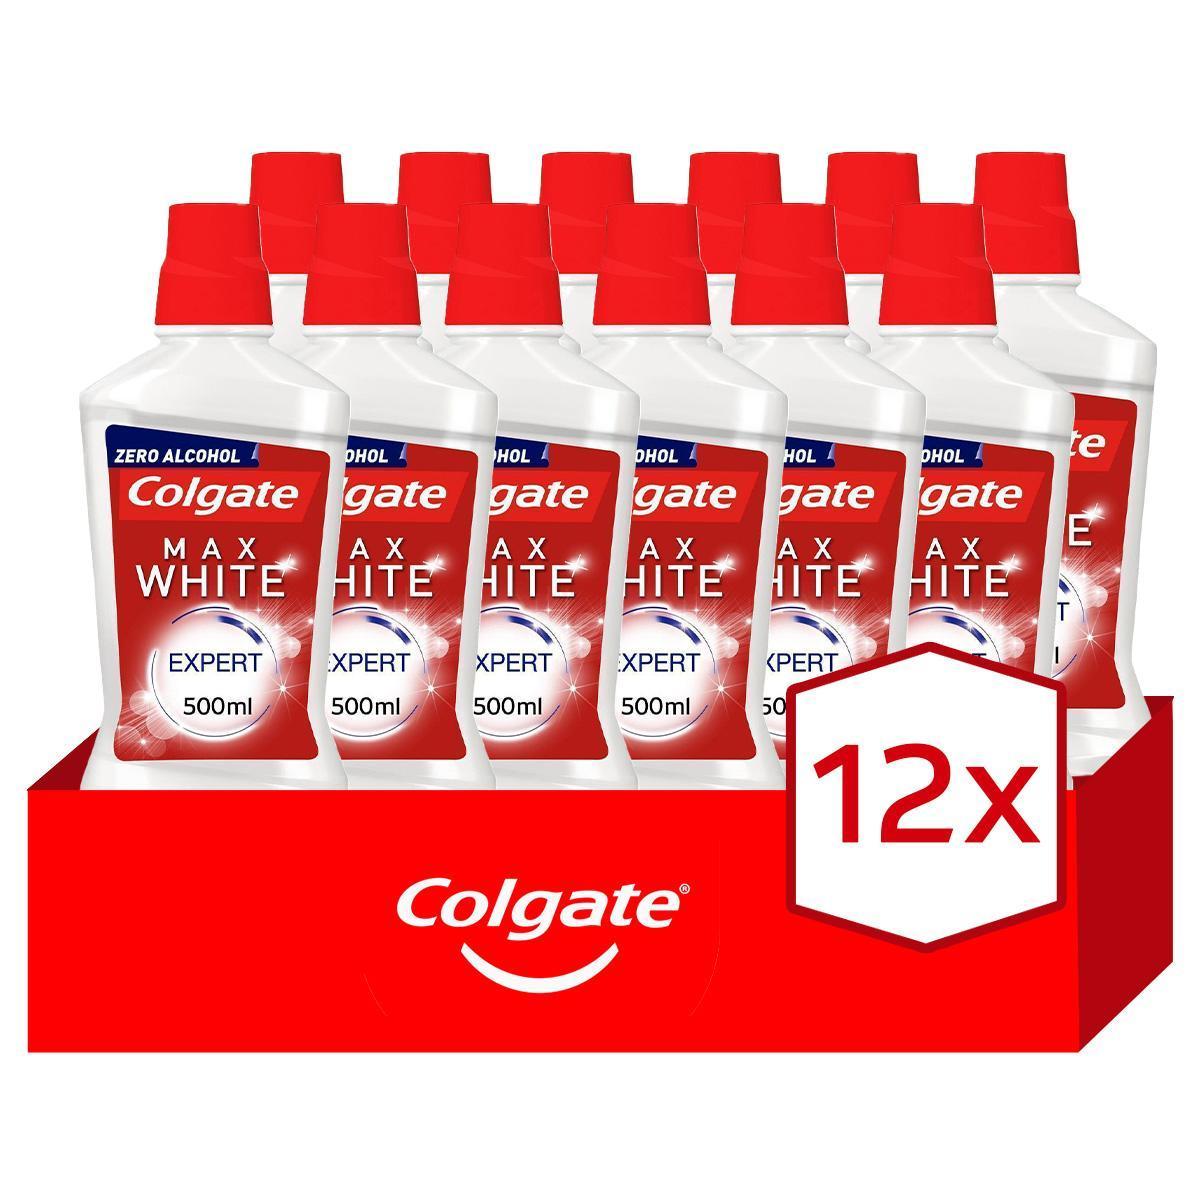 Colgate - Enjuague bucal blanqueador Colgate Max White Expert, dientes blancos 500ml. Pack 12